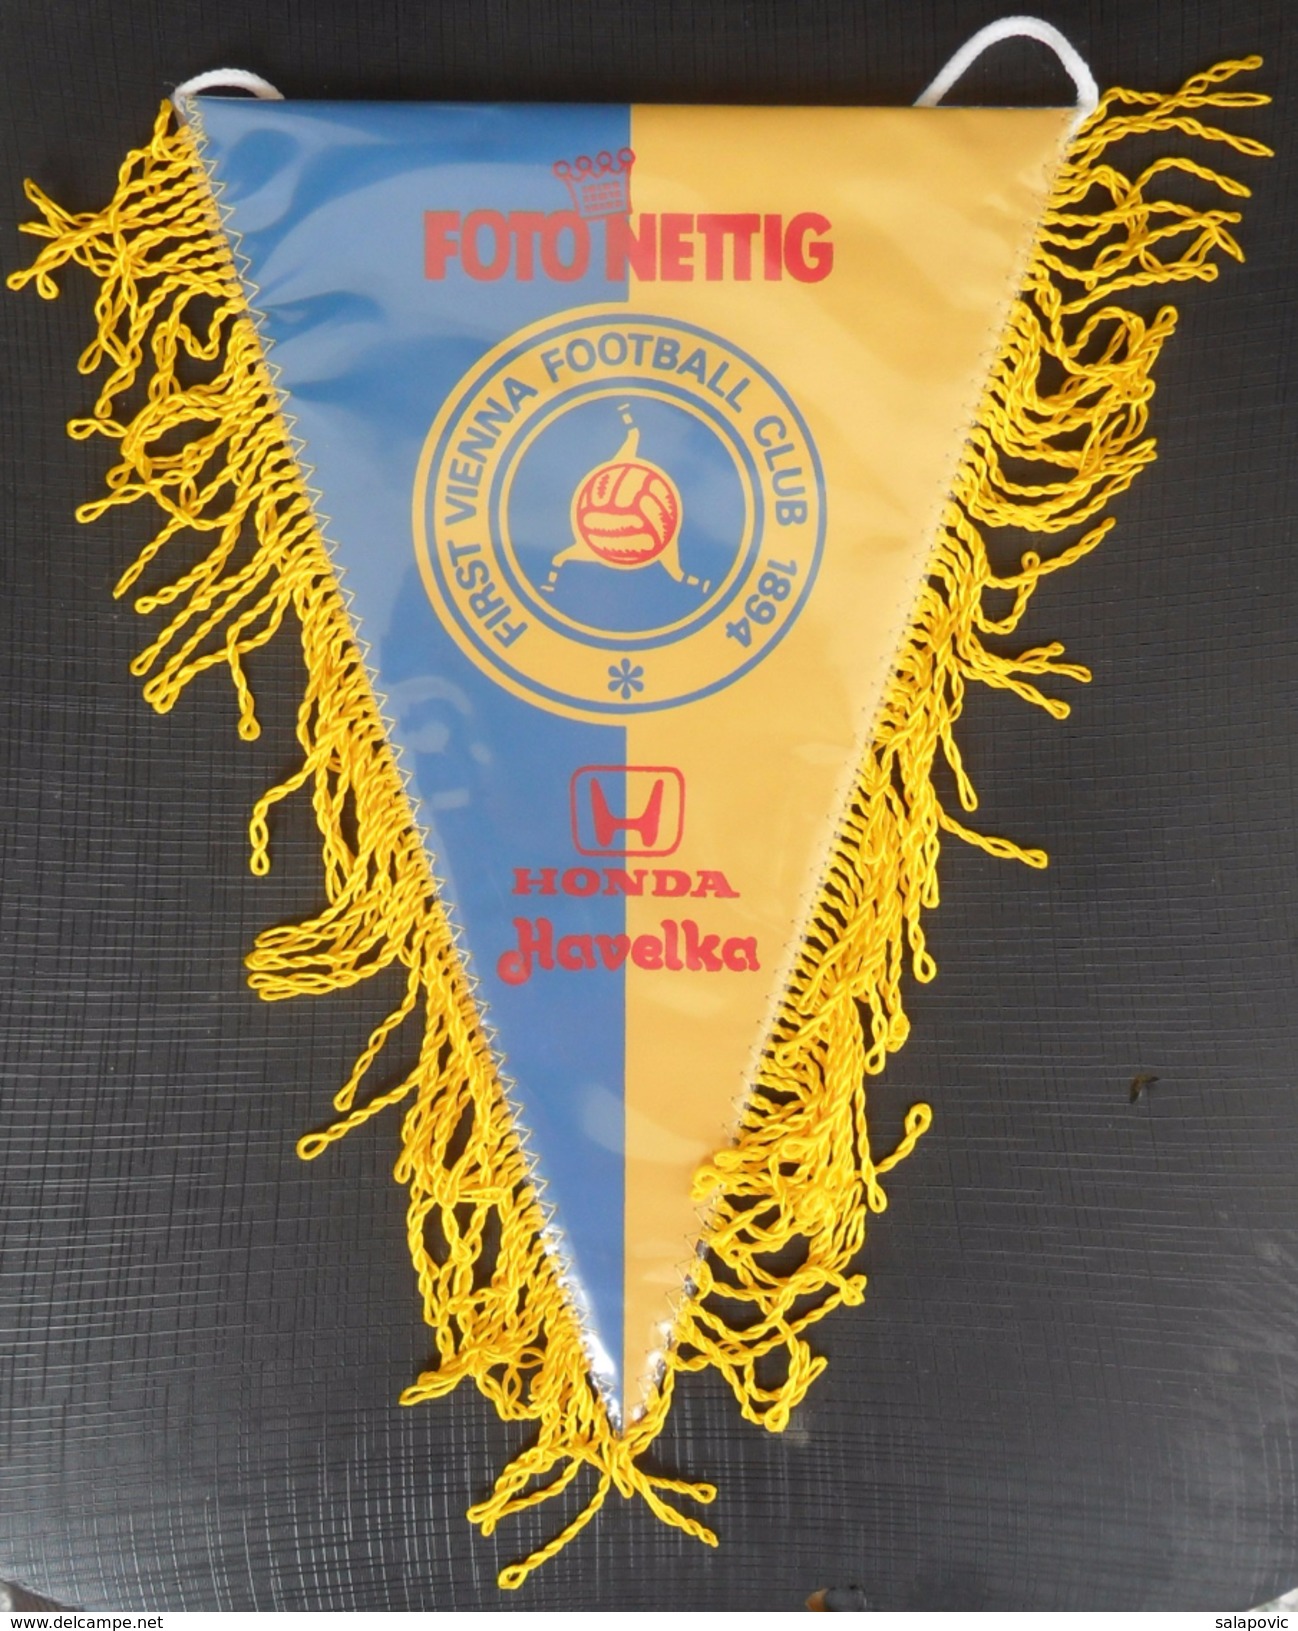 First Vienna FC AUSTRIA FOOTBALL CLUB, SOCCER / FUTBOL / CALCIO OLD PENNANT, SPORTS FLAG - Uniformes Recordatorios & Misc